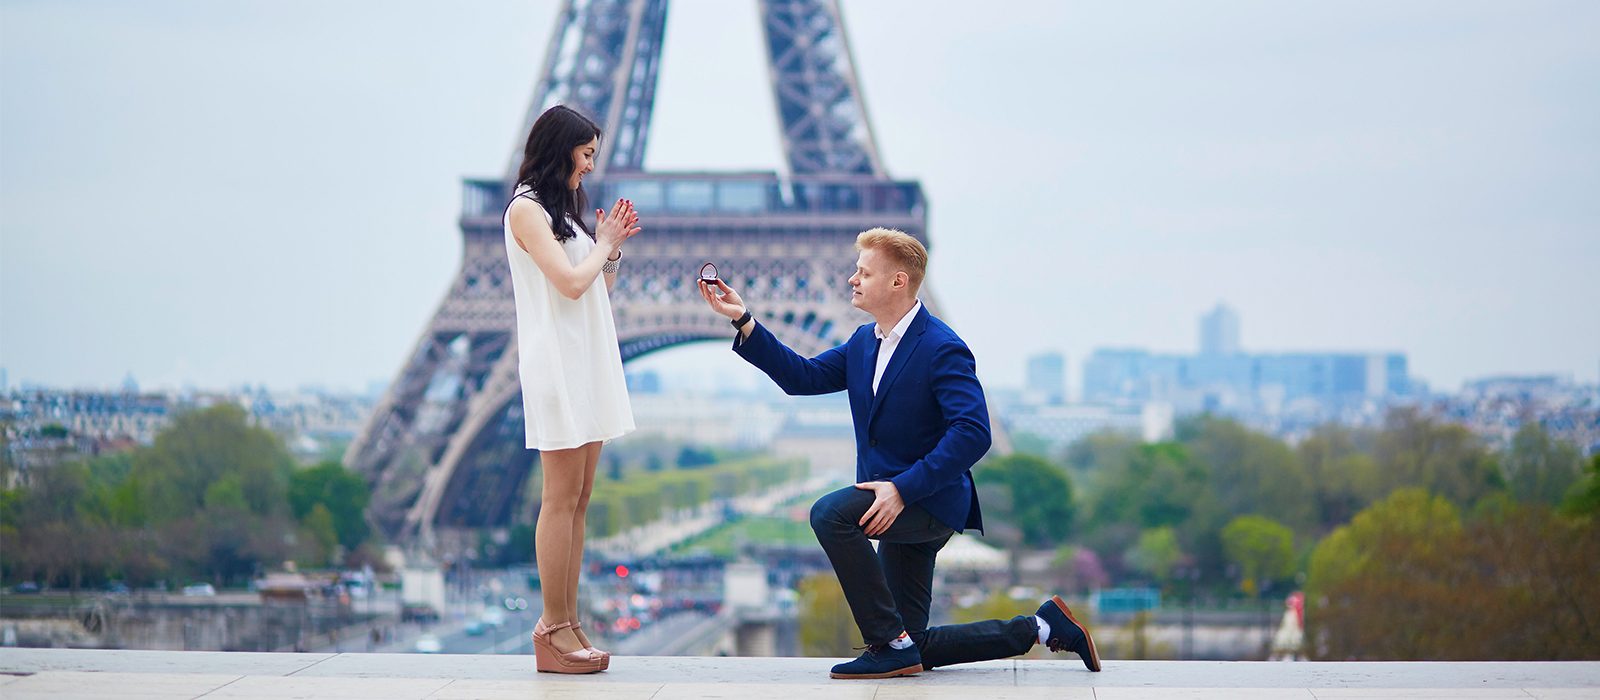 7 Dreamy Romantic Proposal Destinations In The World